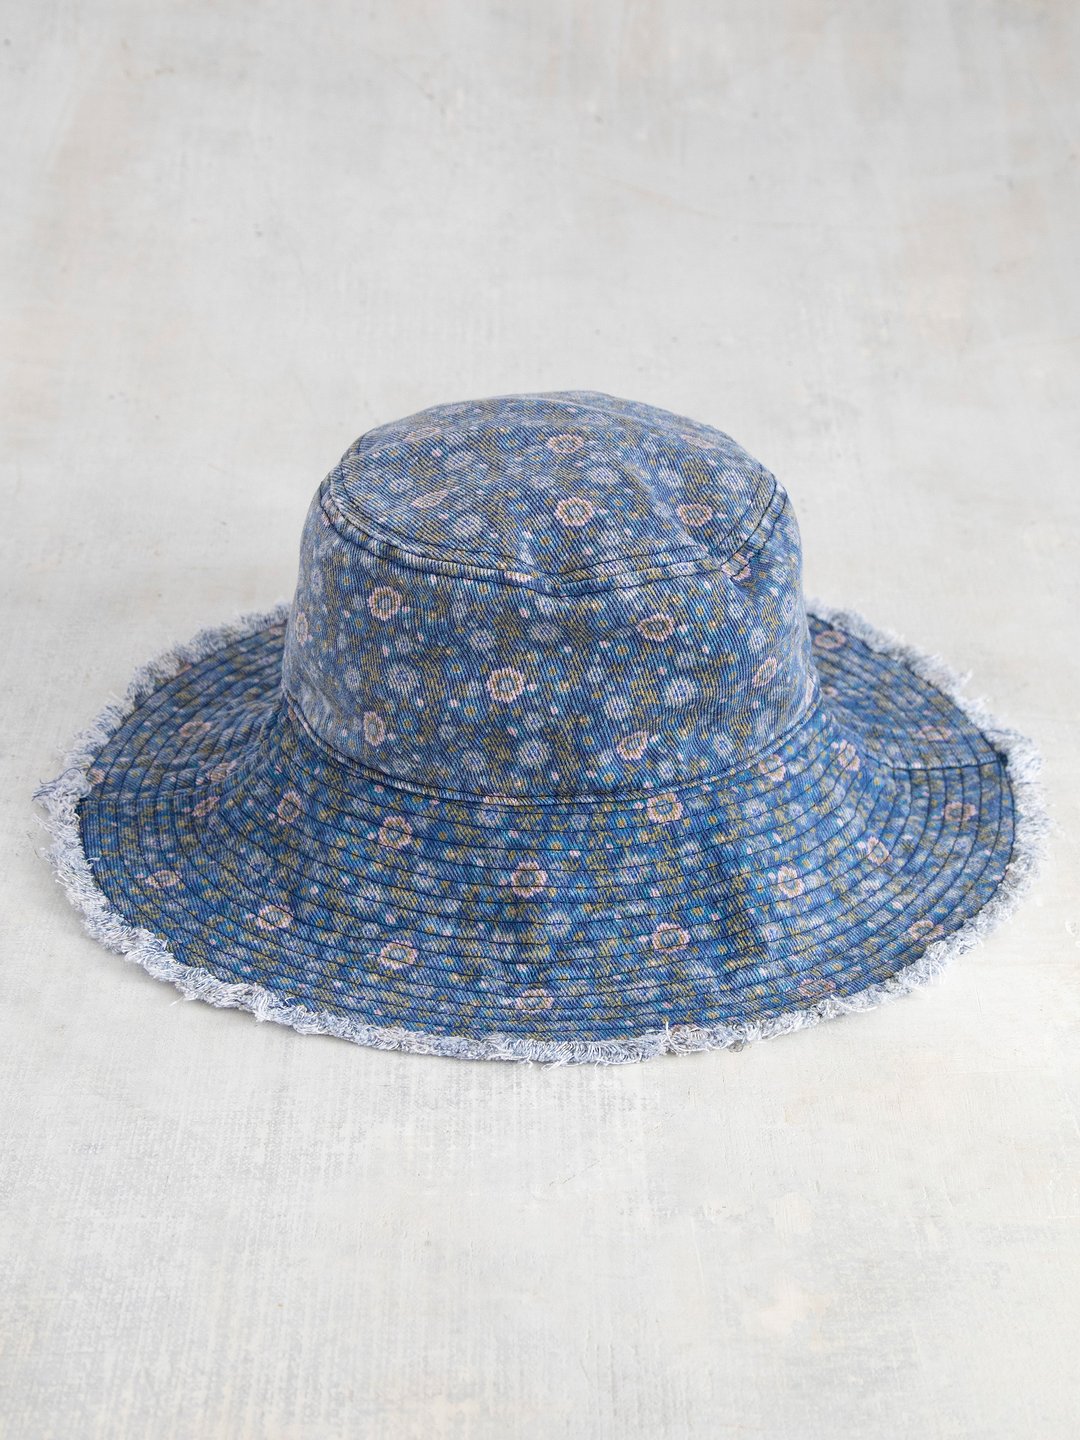 Navy Floral Bucket Hat